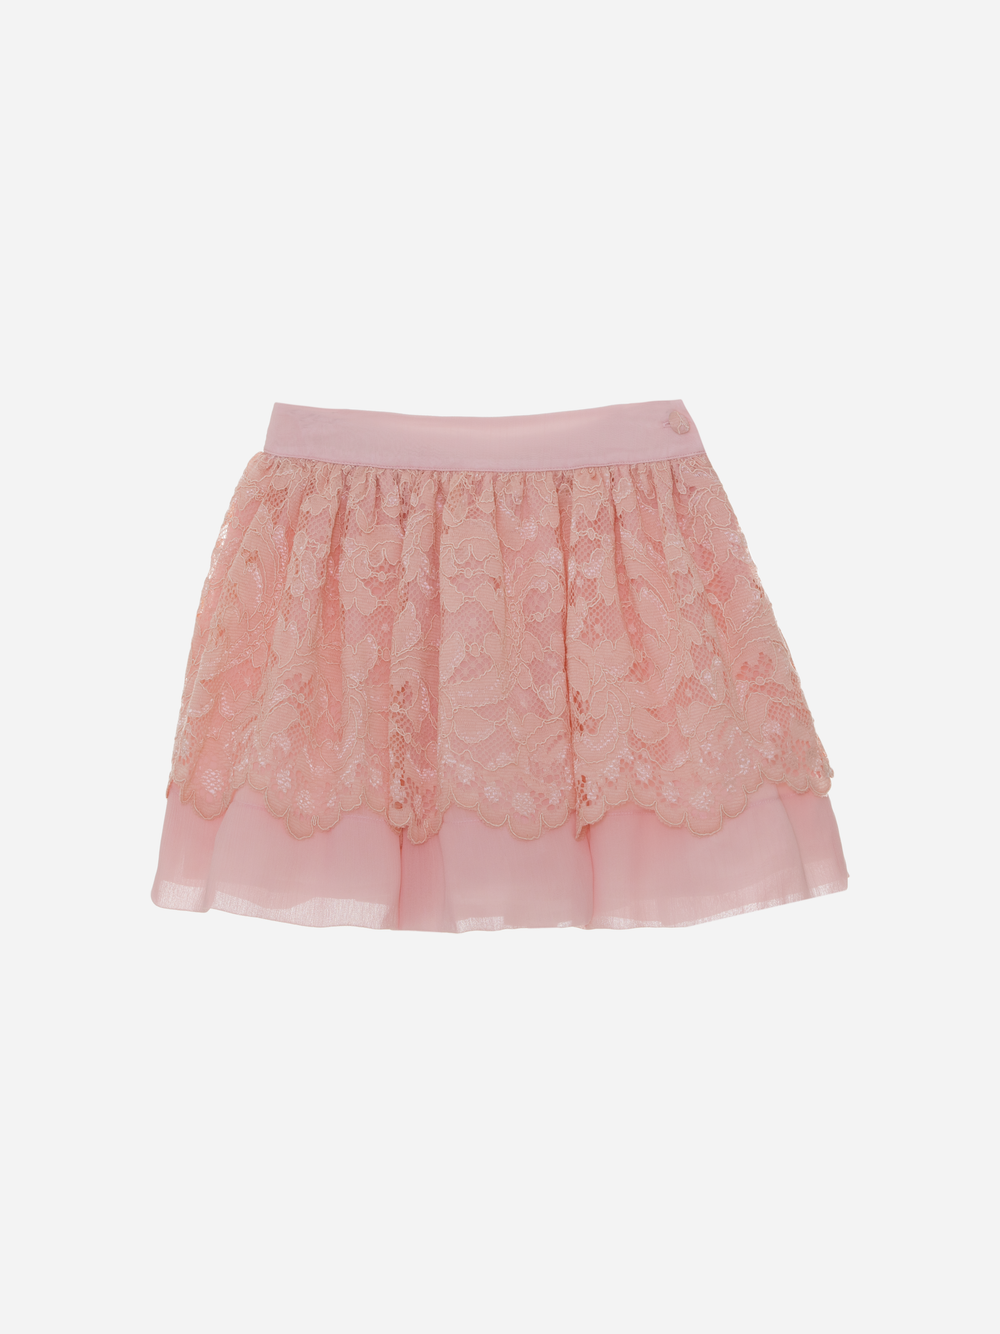 Light pink lace skirt